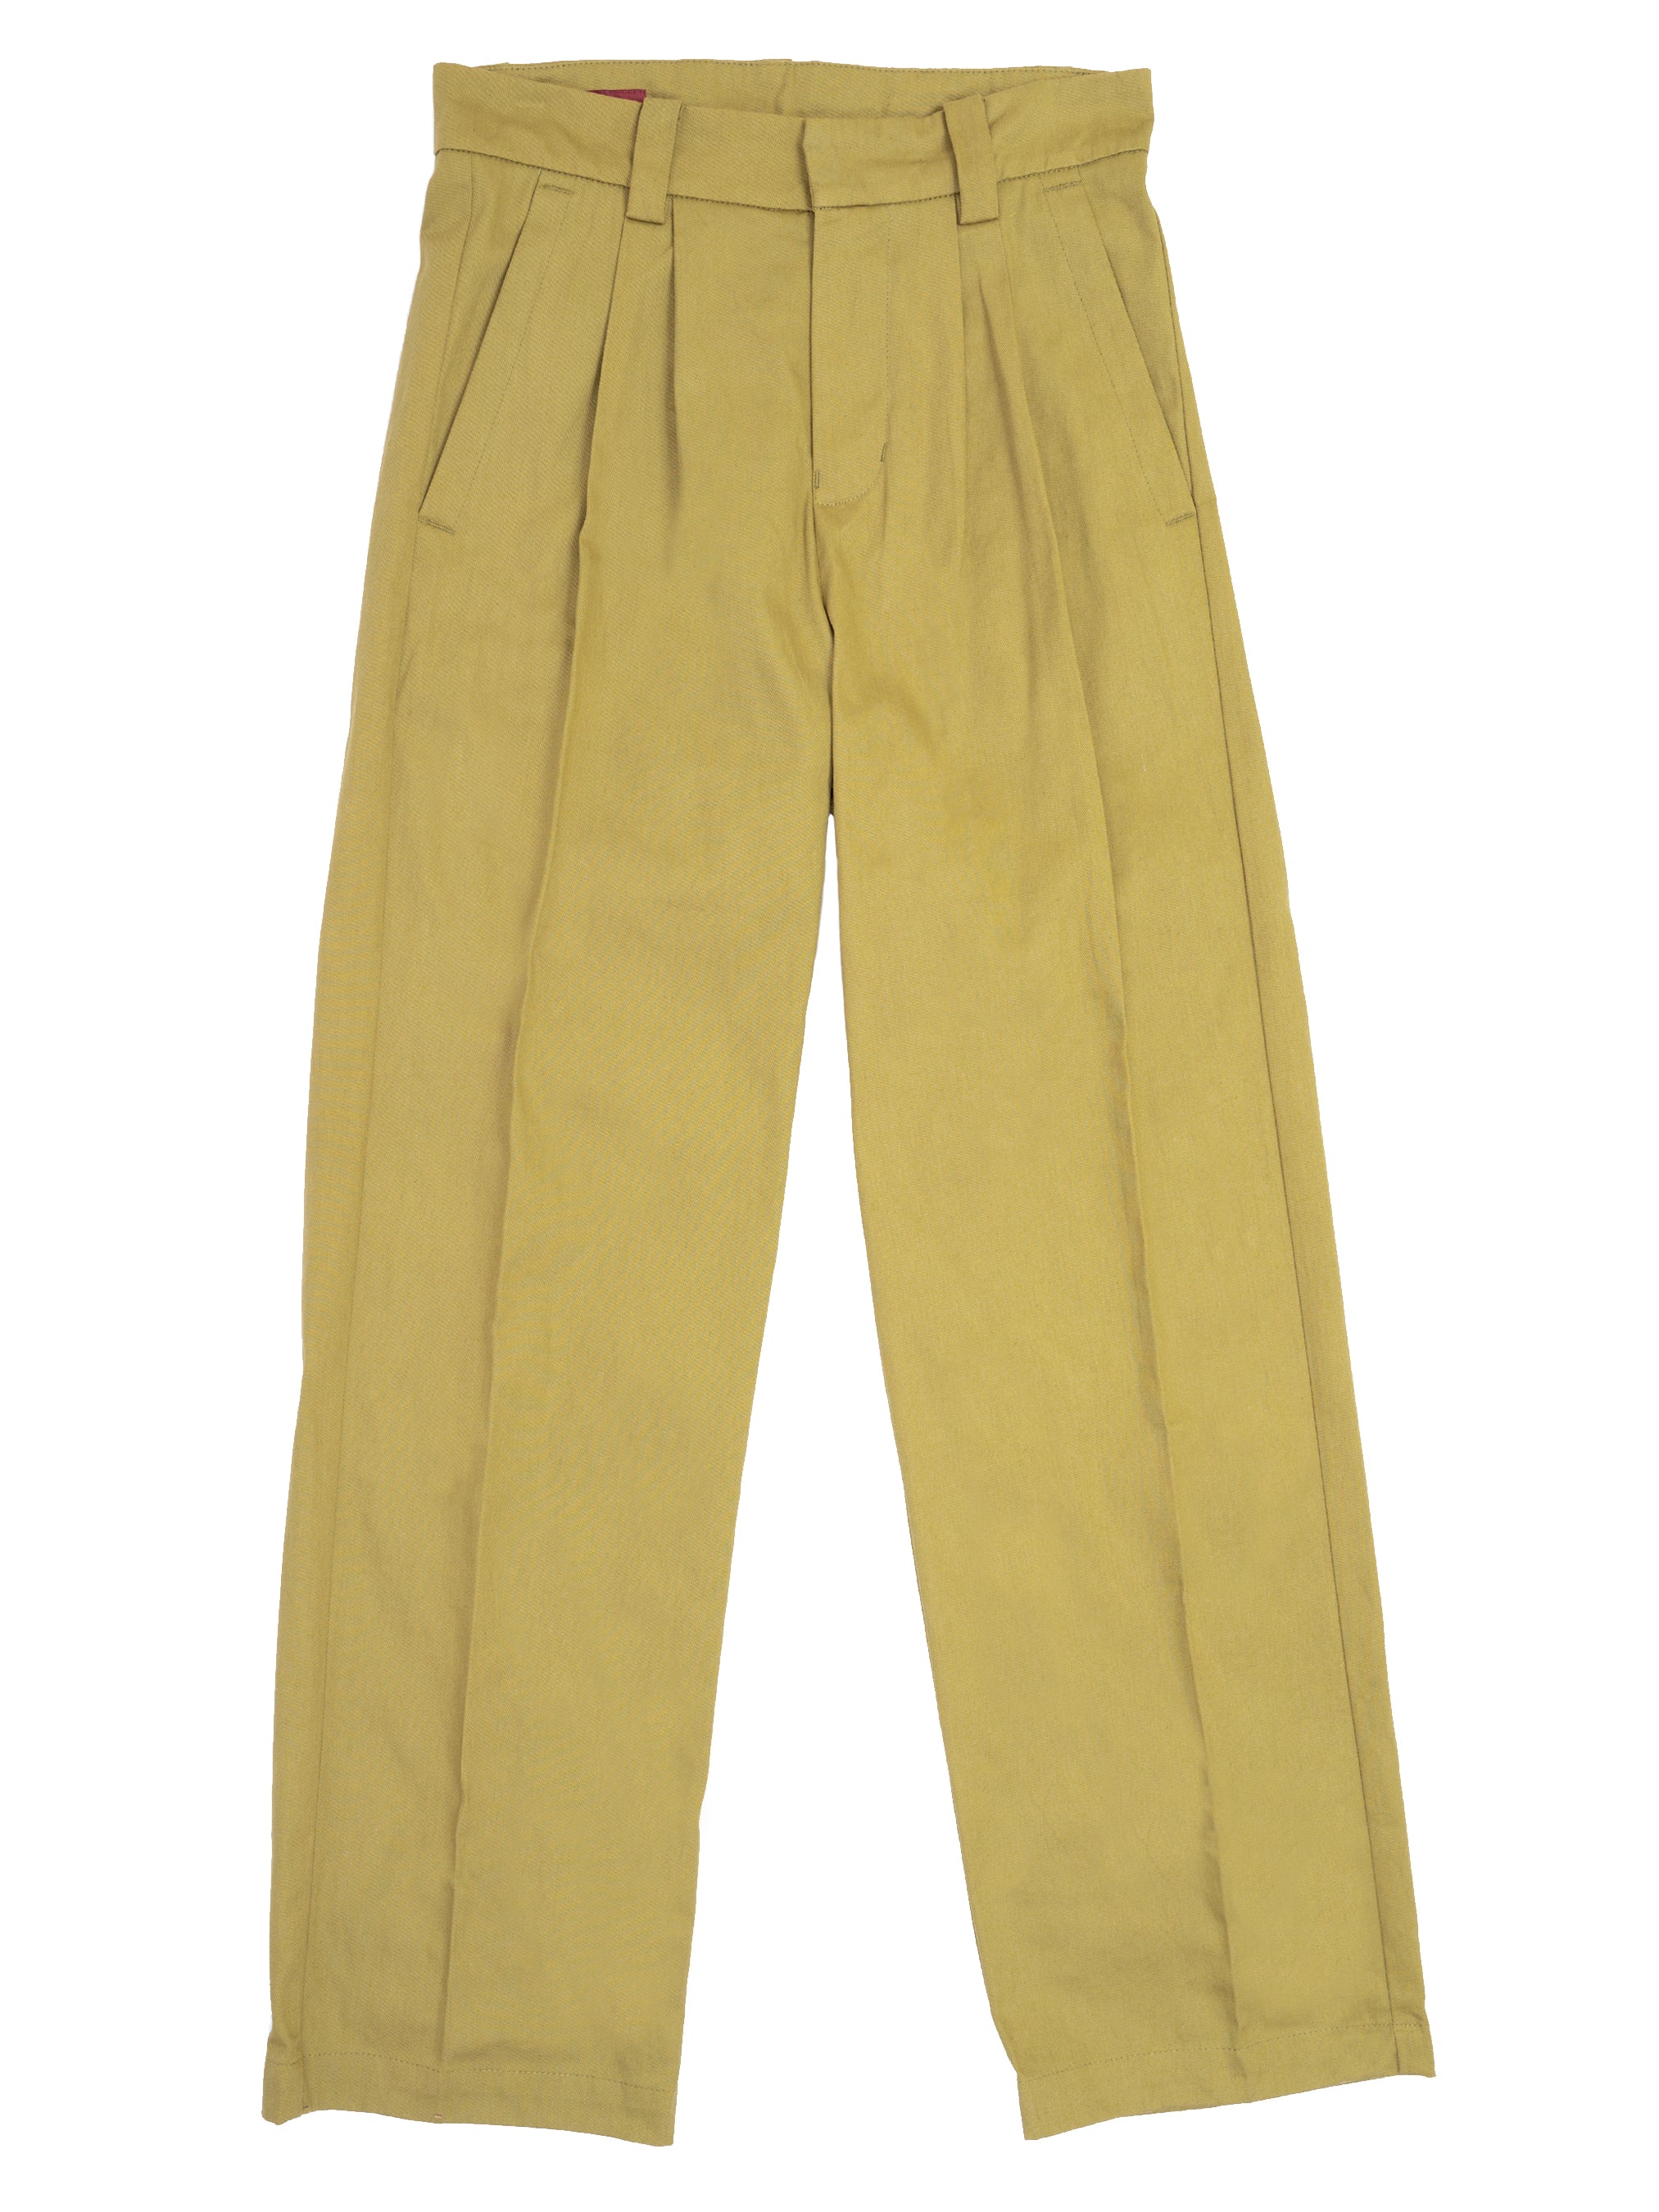 Cotton twill trousers - Khaki green - Men | H&M IN